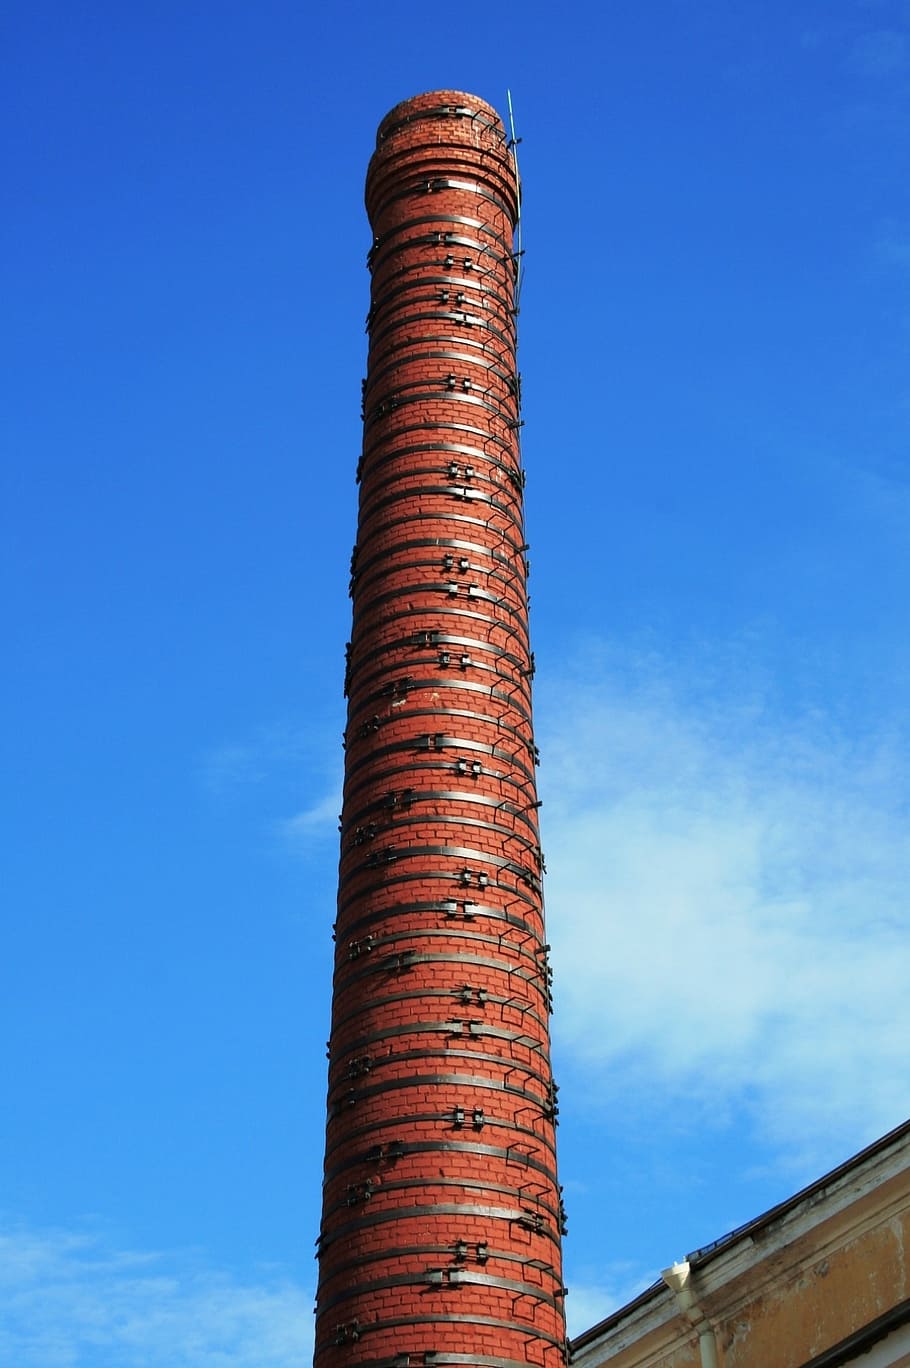 smokestack, red, brick, tall, circumventing metal ties, cylindrical, sky, blue, chimney, tower